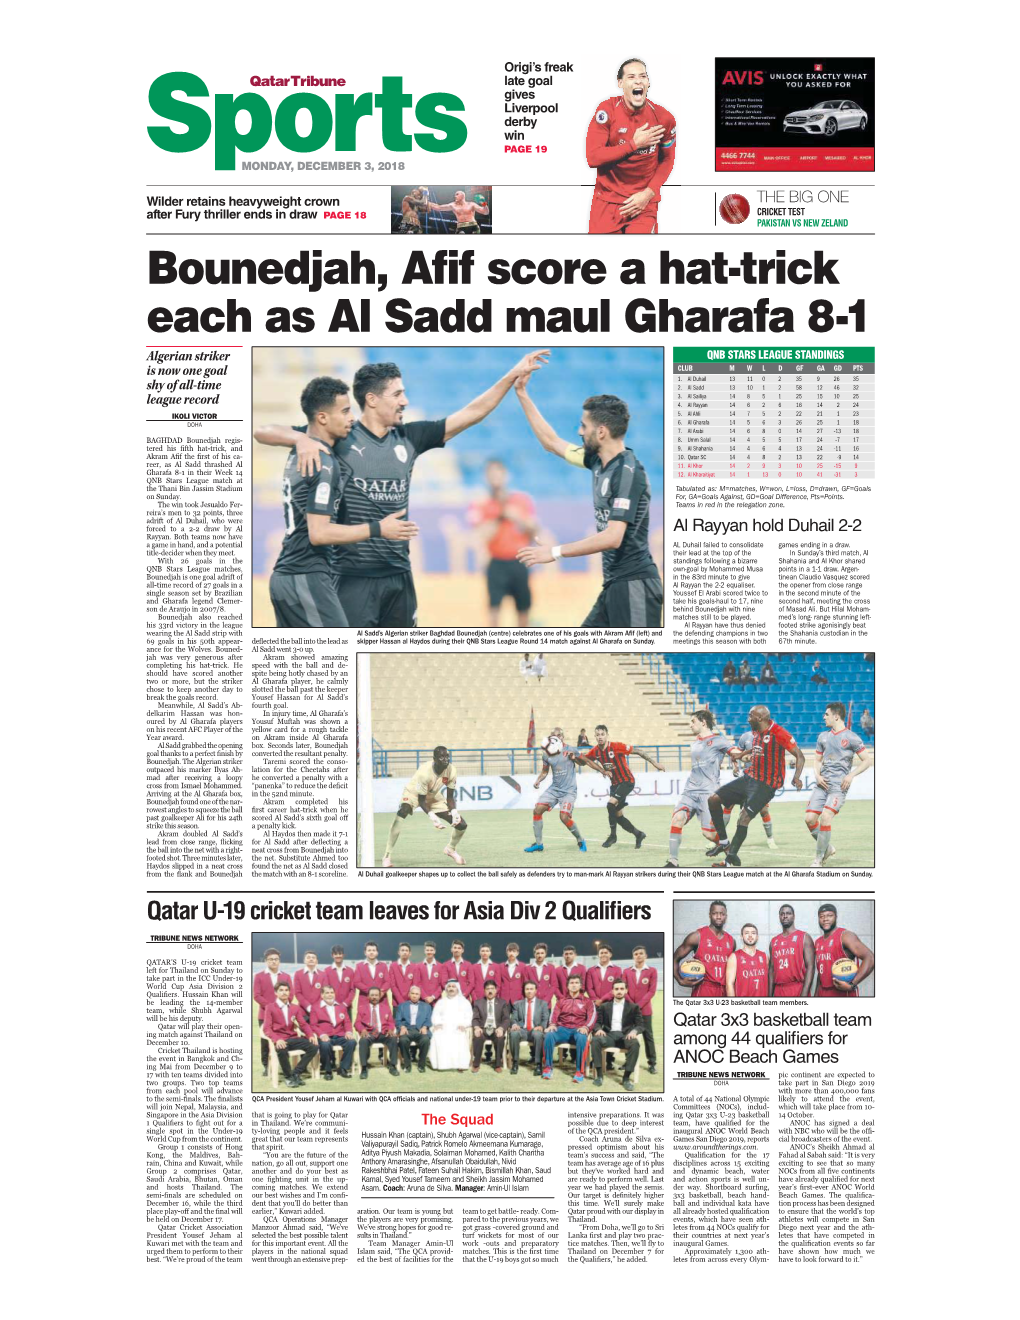 Bounedjah, Afif Score a Hat-Trick Each As Al Sadd Maul Gharafa 8-1 Algerian Striker QNB STARS LEAGUE STANDINGS Is Now One Goal CLUB M W L D GF GA GD PTS 1